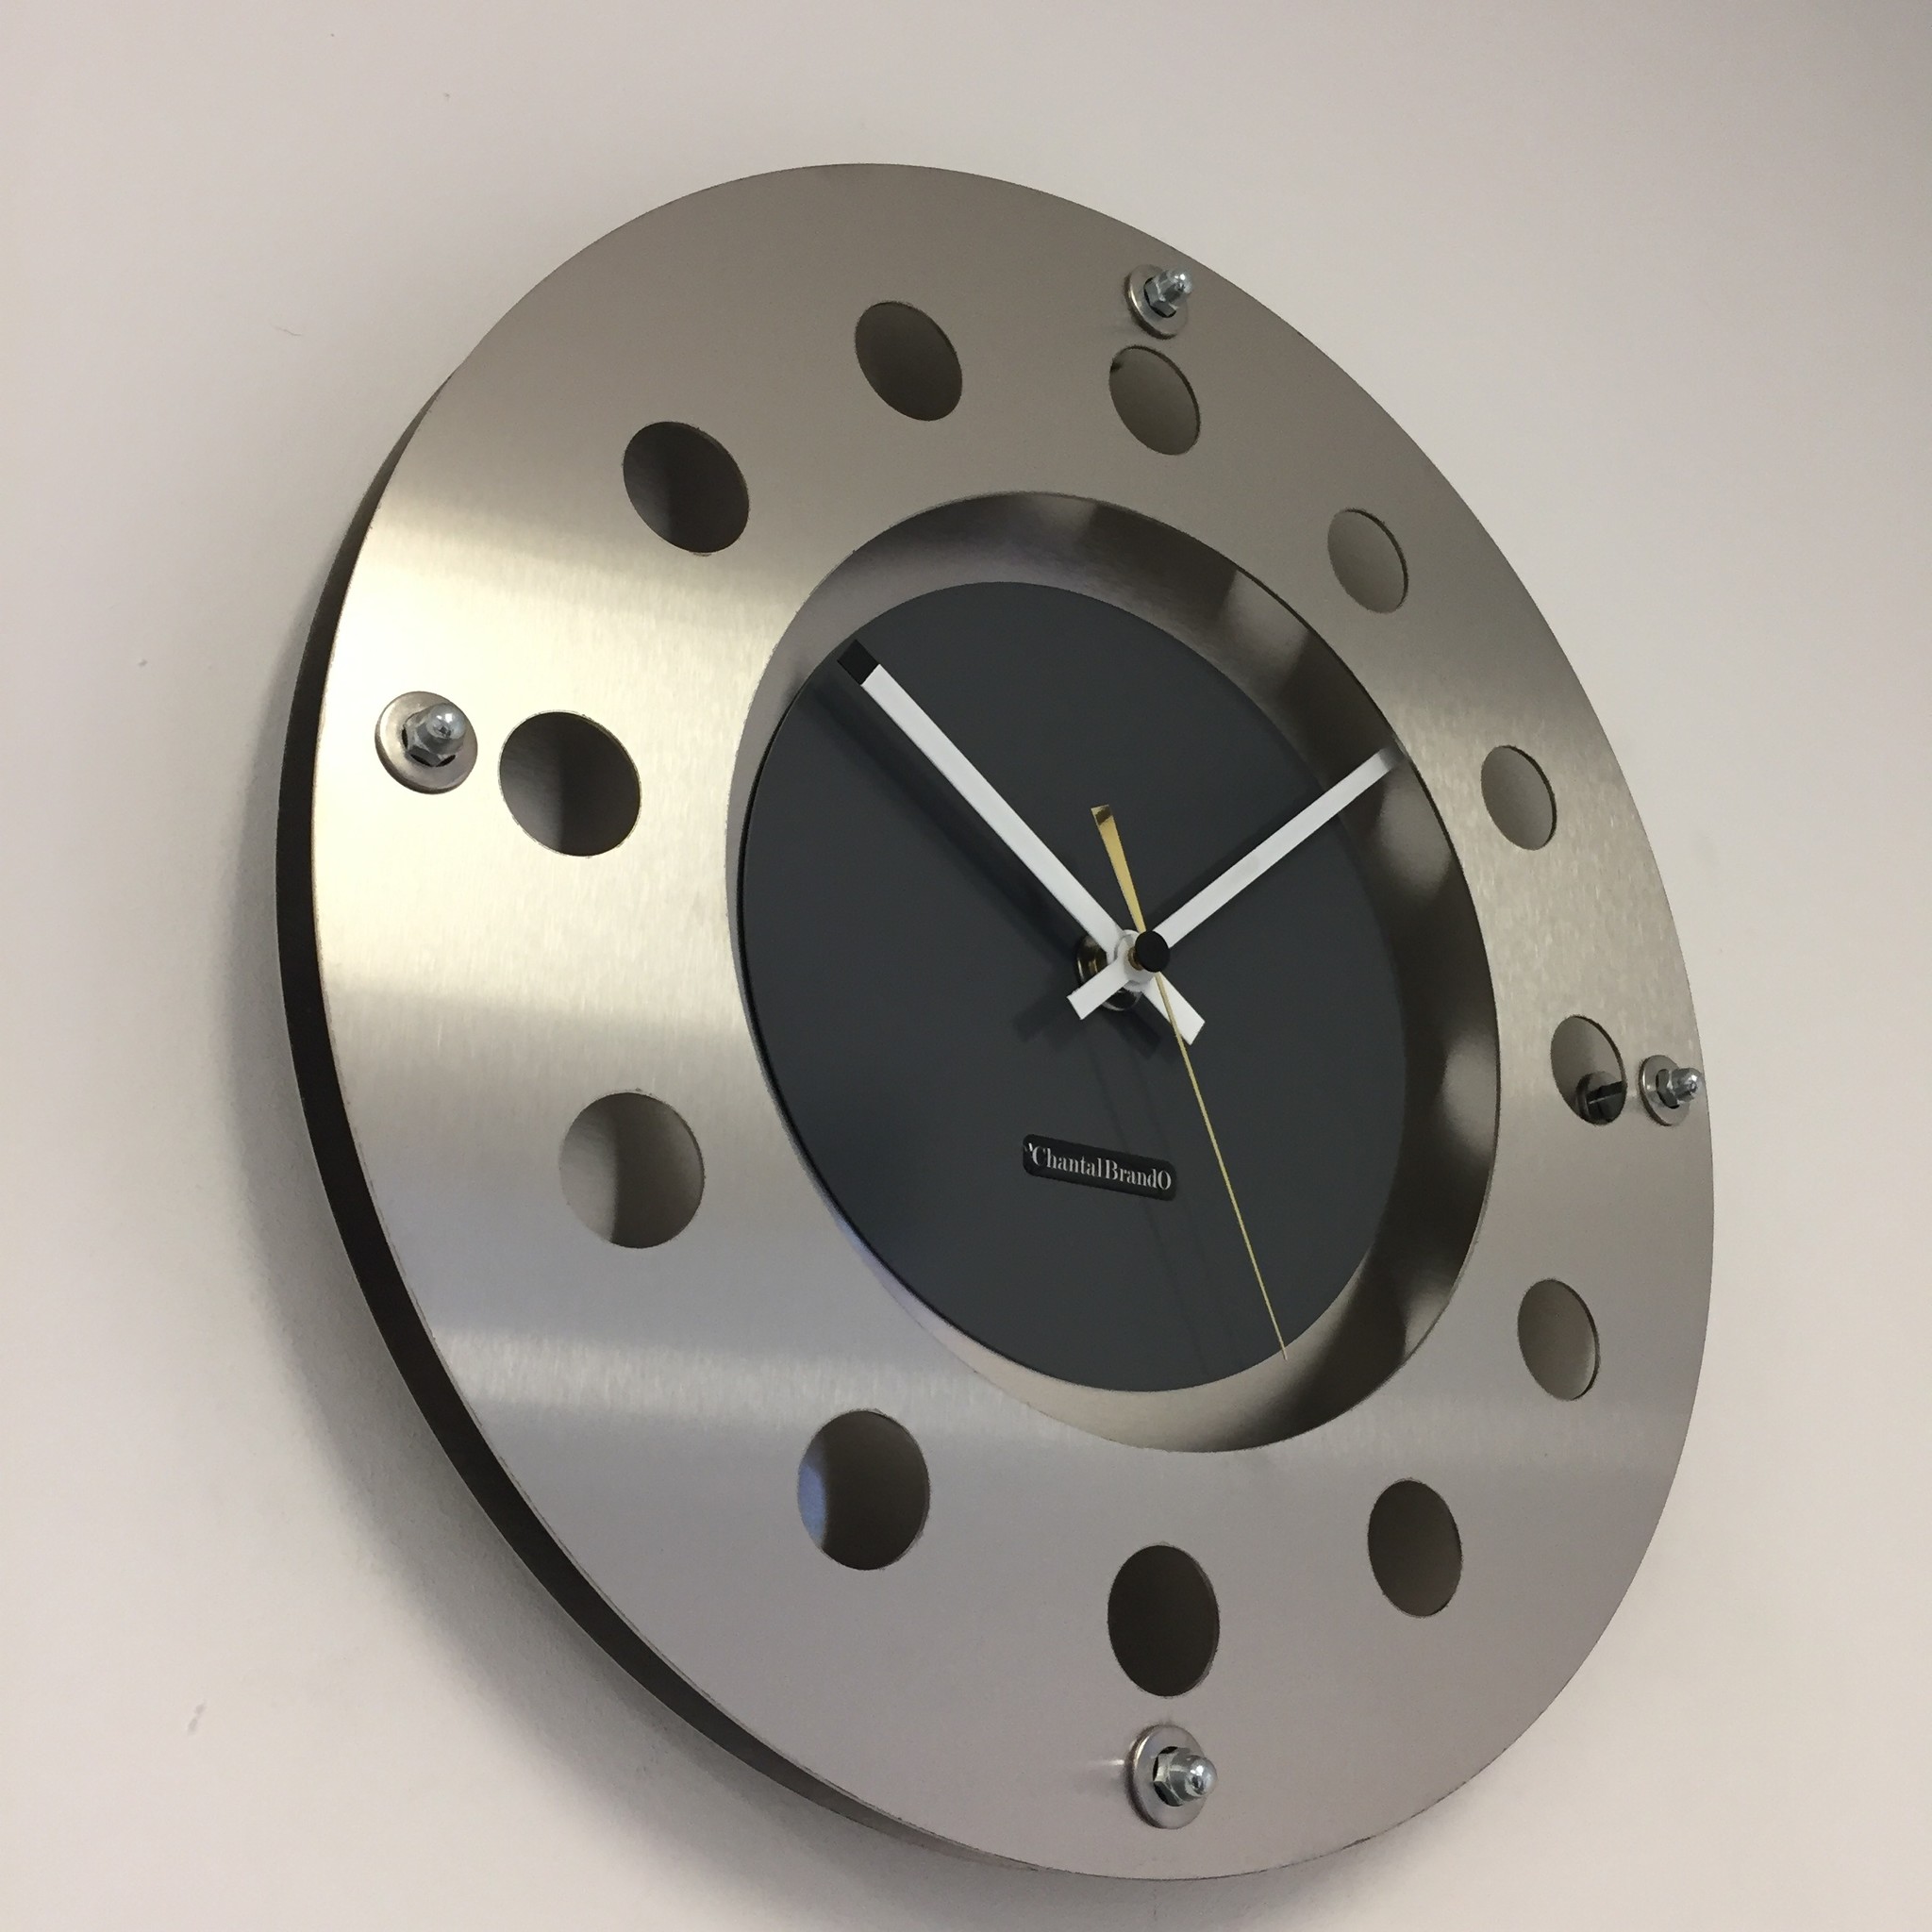 ChantalBrandO Design - Wall clock Mecanica Small Indoor Circle Gray White Gold Modern Dutch Design Handmade 40 cm